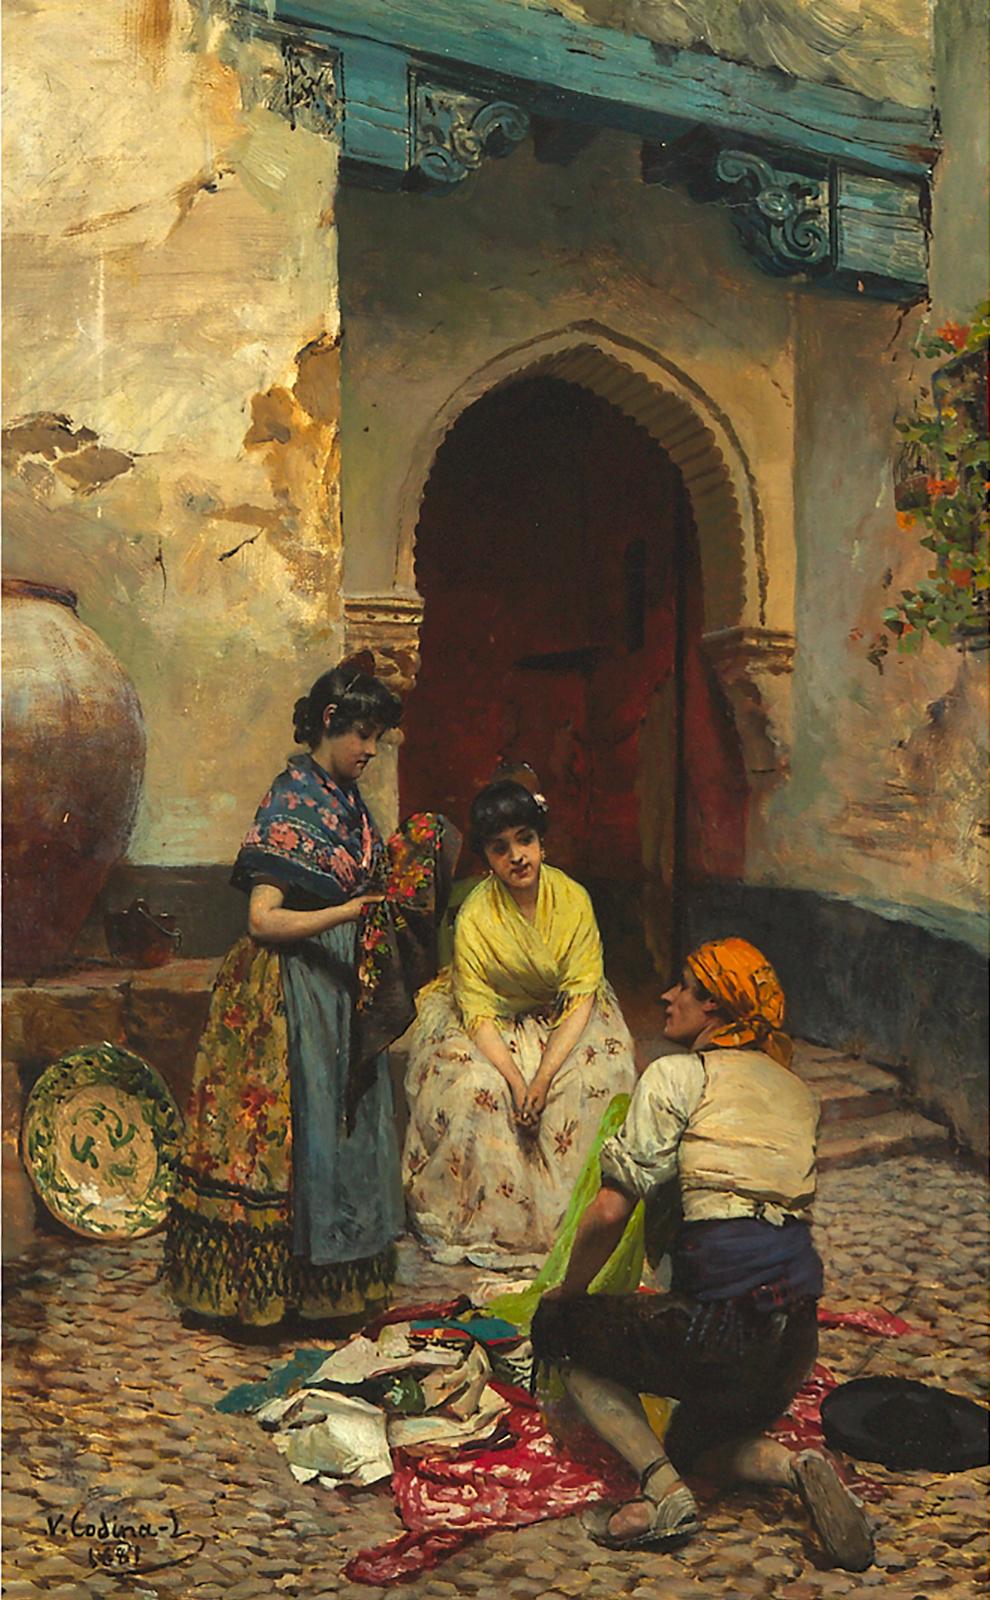 Victoriano Codina y Langlin (1844-1911) - The Fabric Seller, 1881